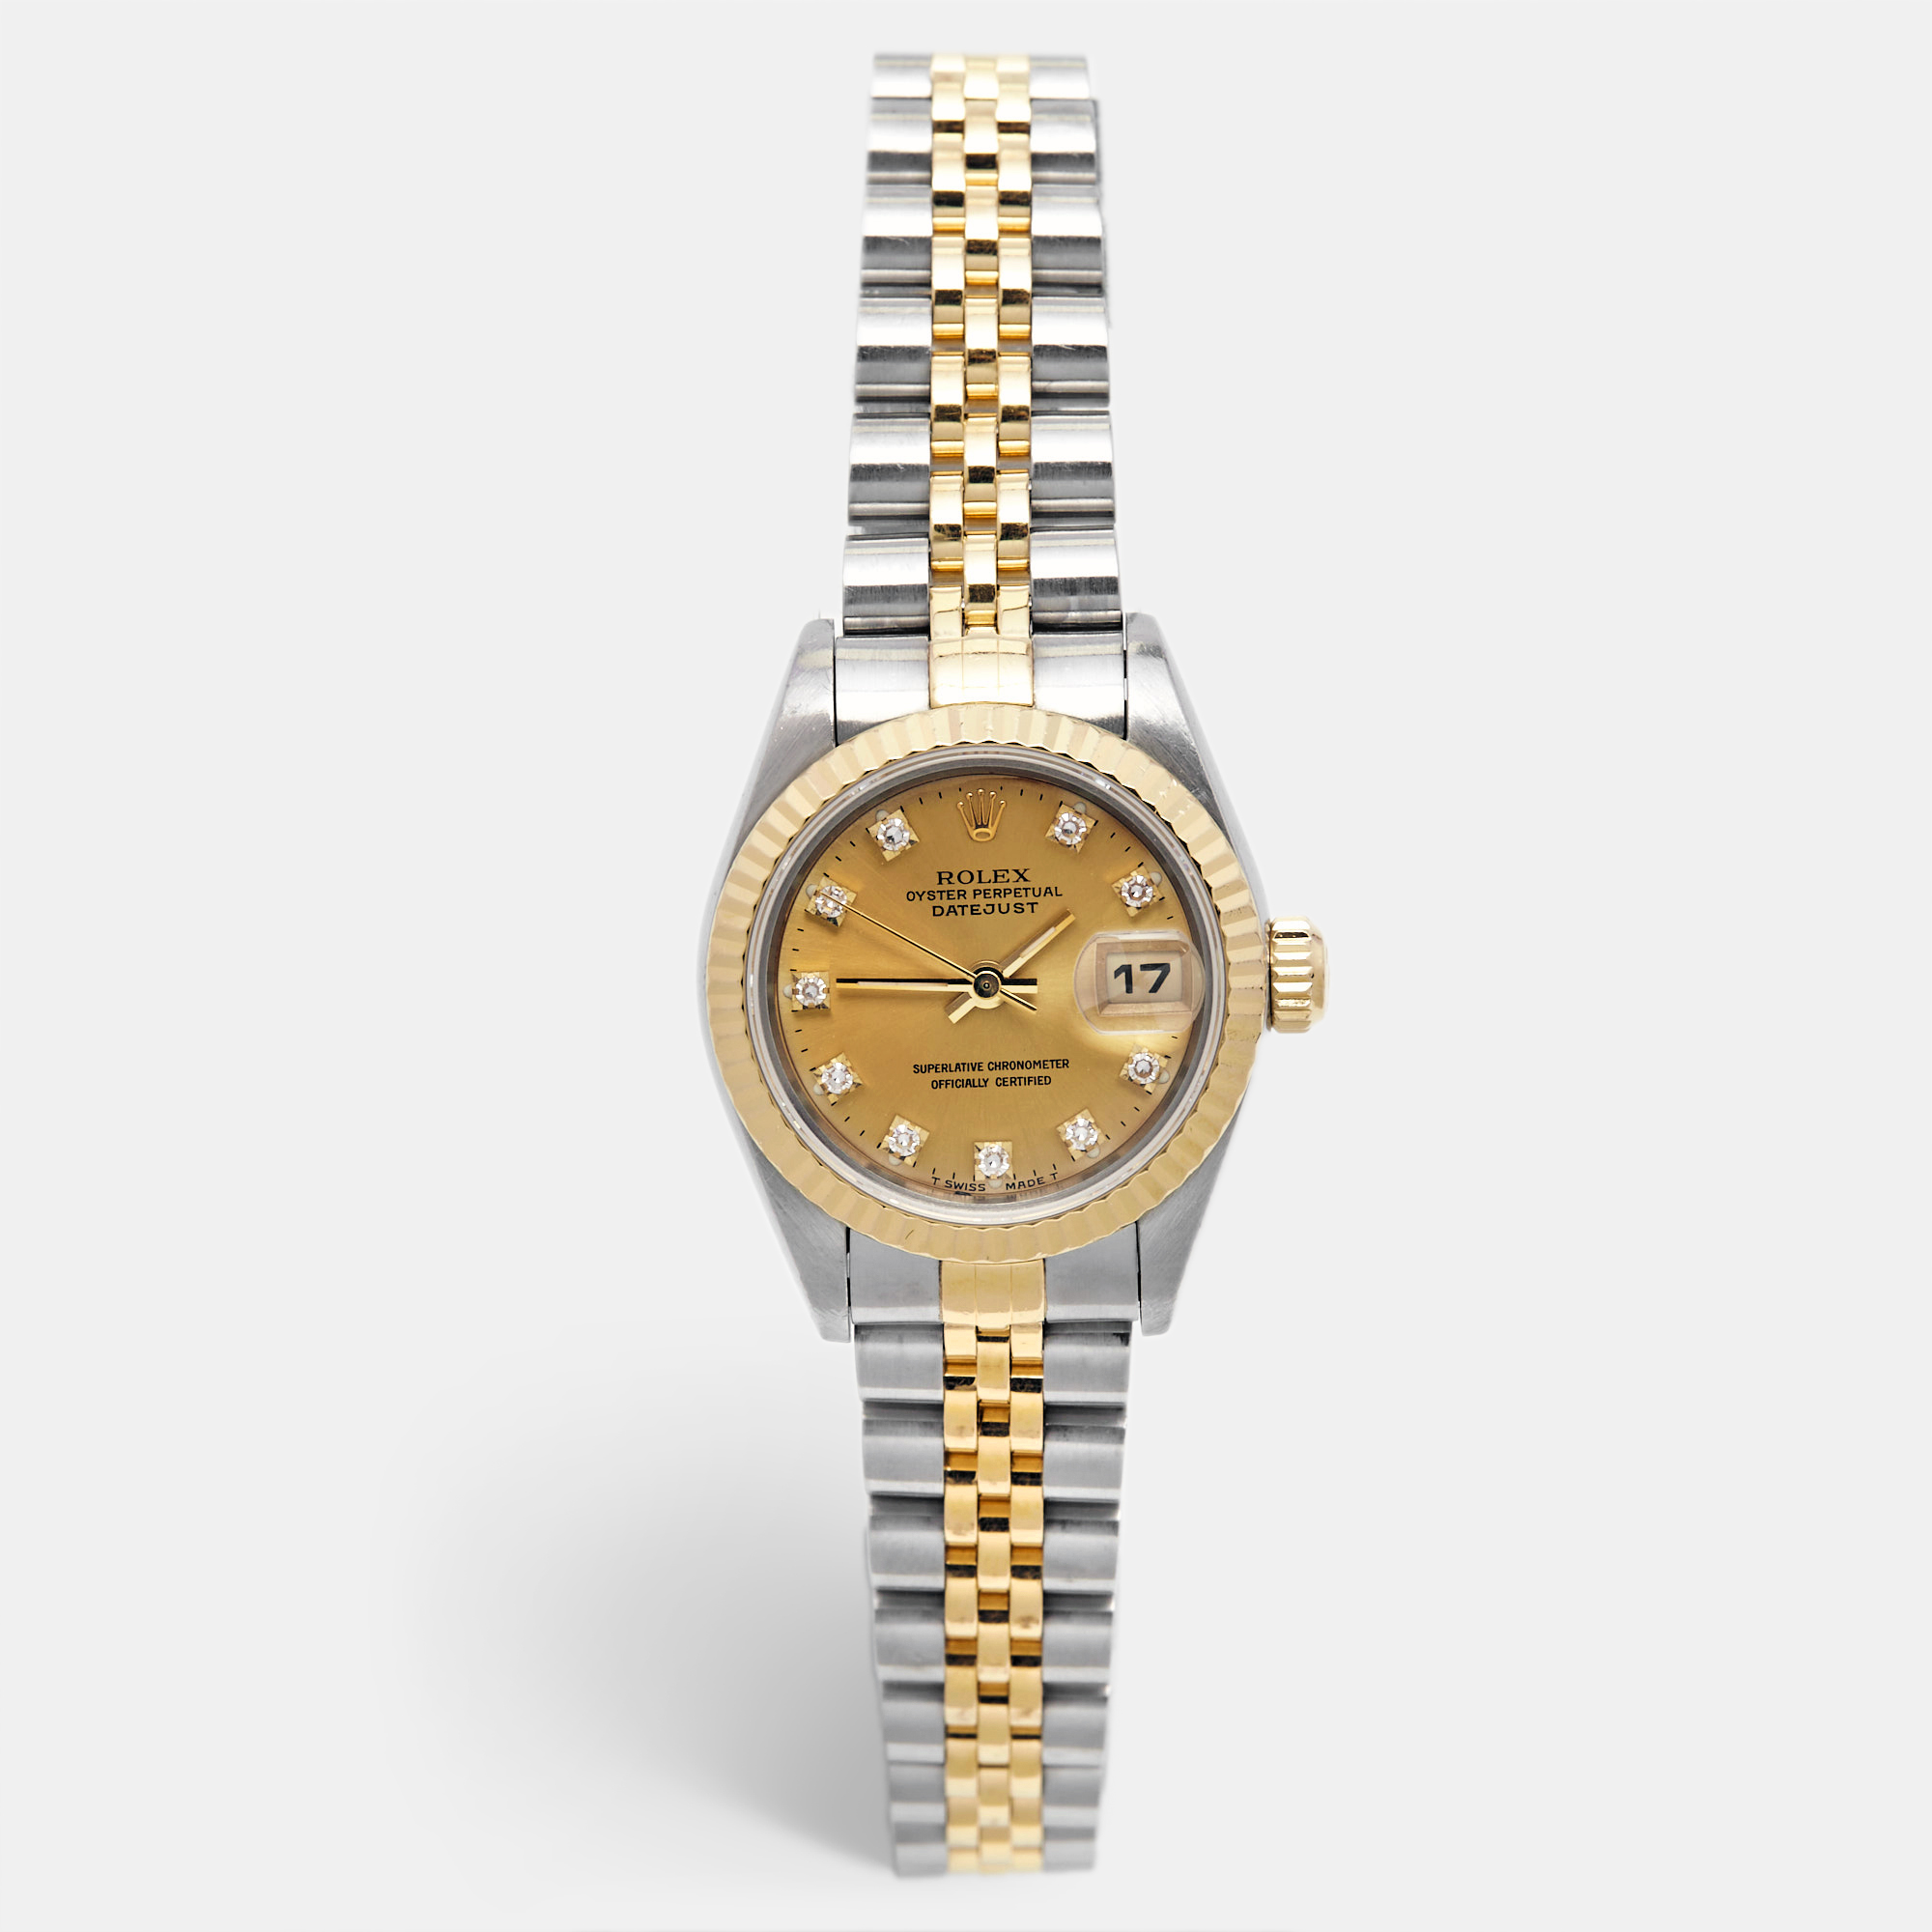 Rolex champagne diamond 18k yellow gold stainless steel datejust 69173 women's wristwatch 26 mm